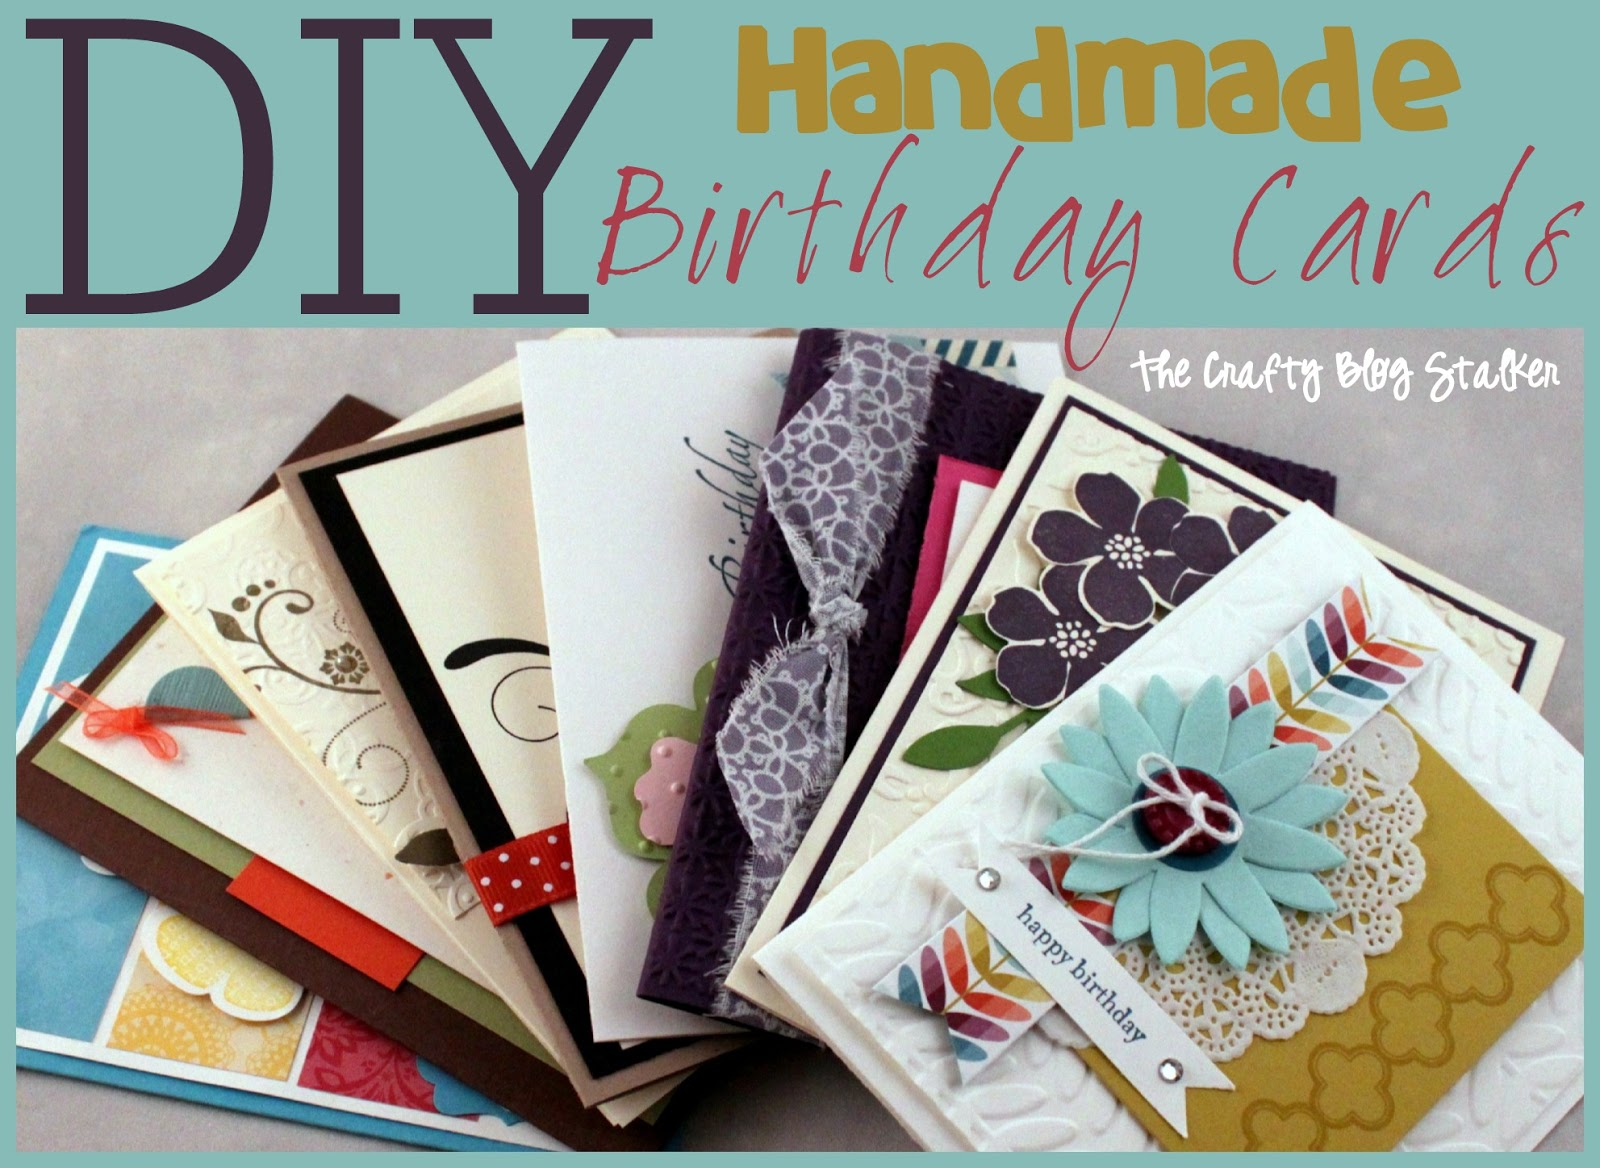 Cute Card Ideas For Birthday Handmade Birthday Card Ideas The Crafty Blog Stalker